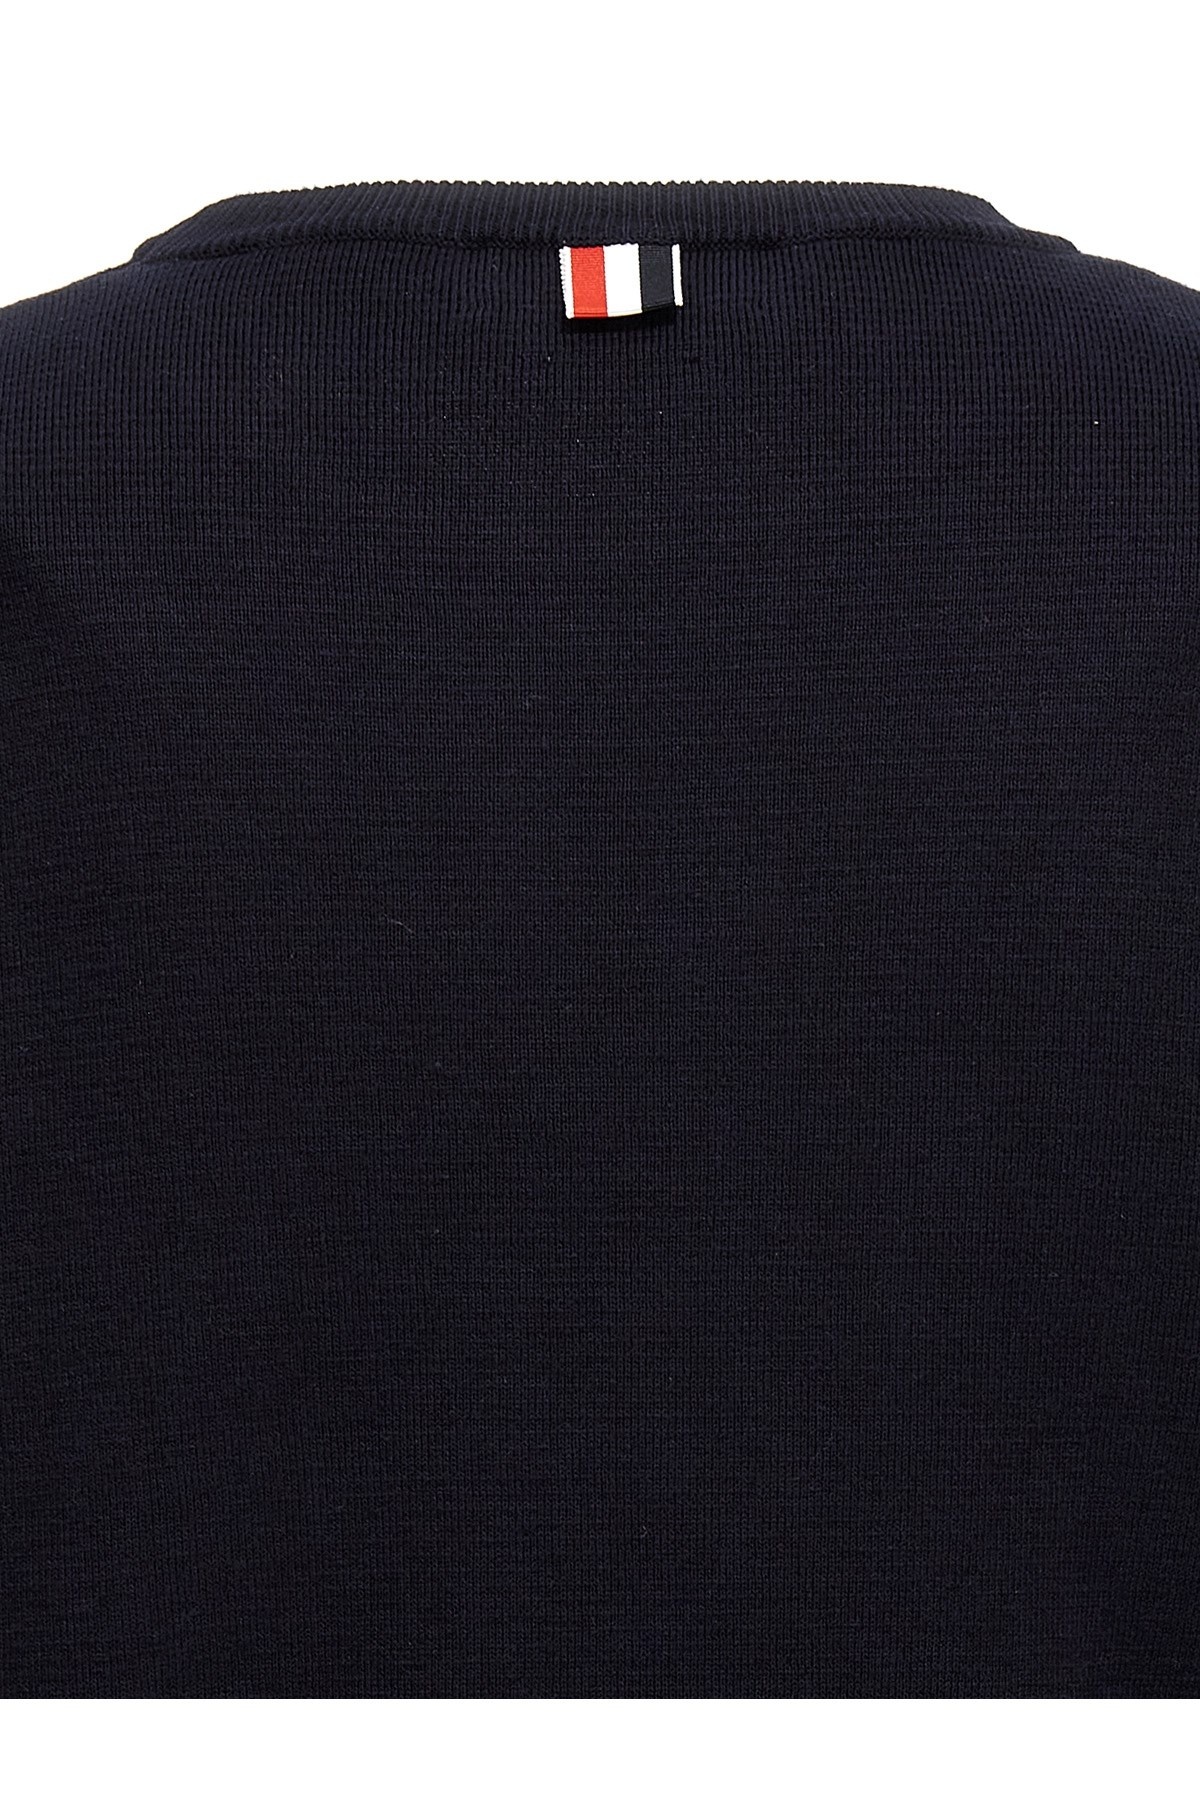 'Classic' sweater - 2